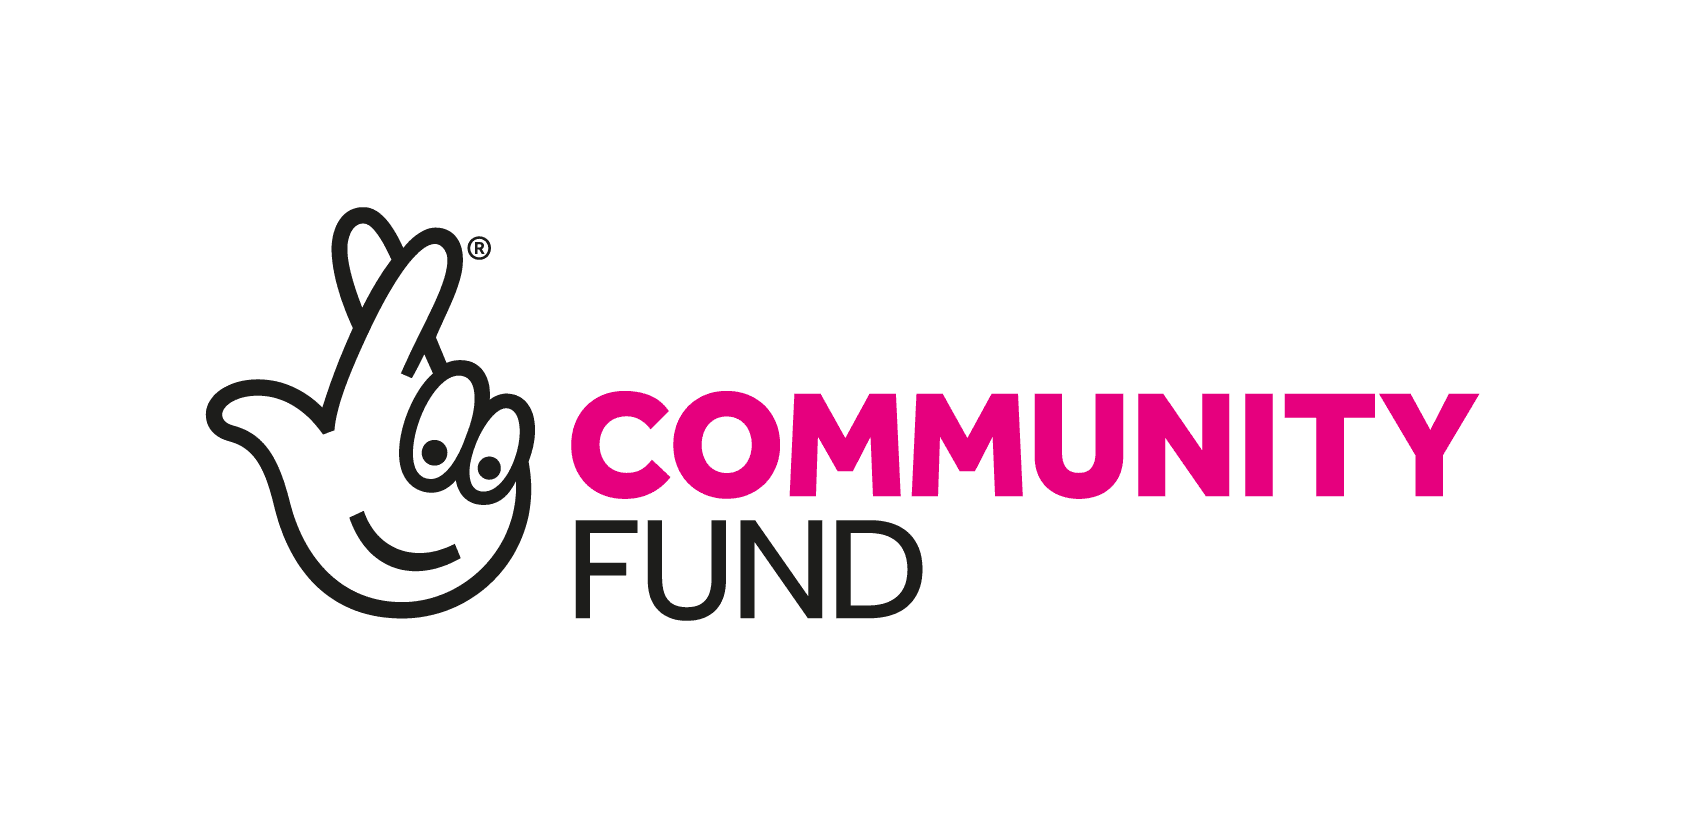 Community funding logo